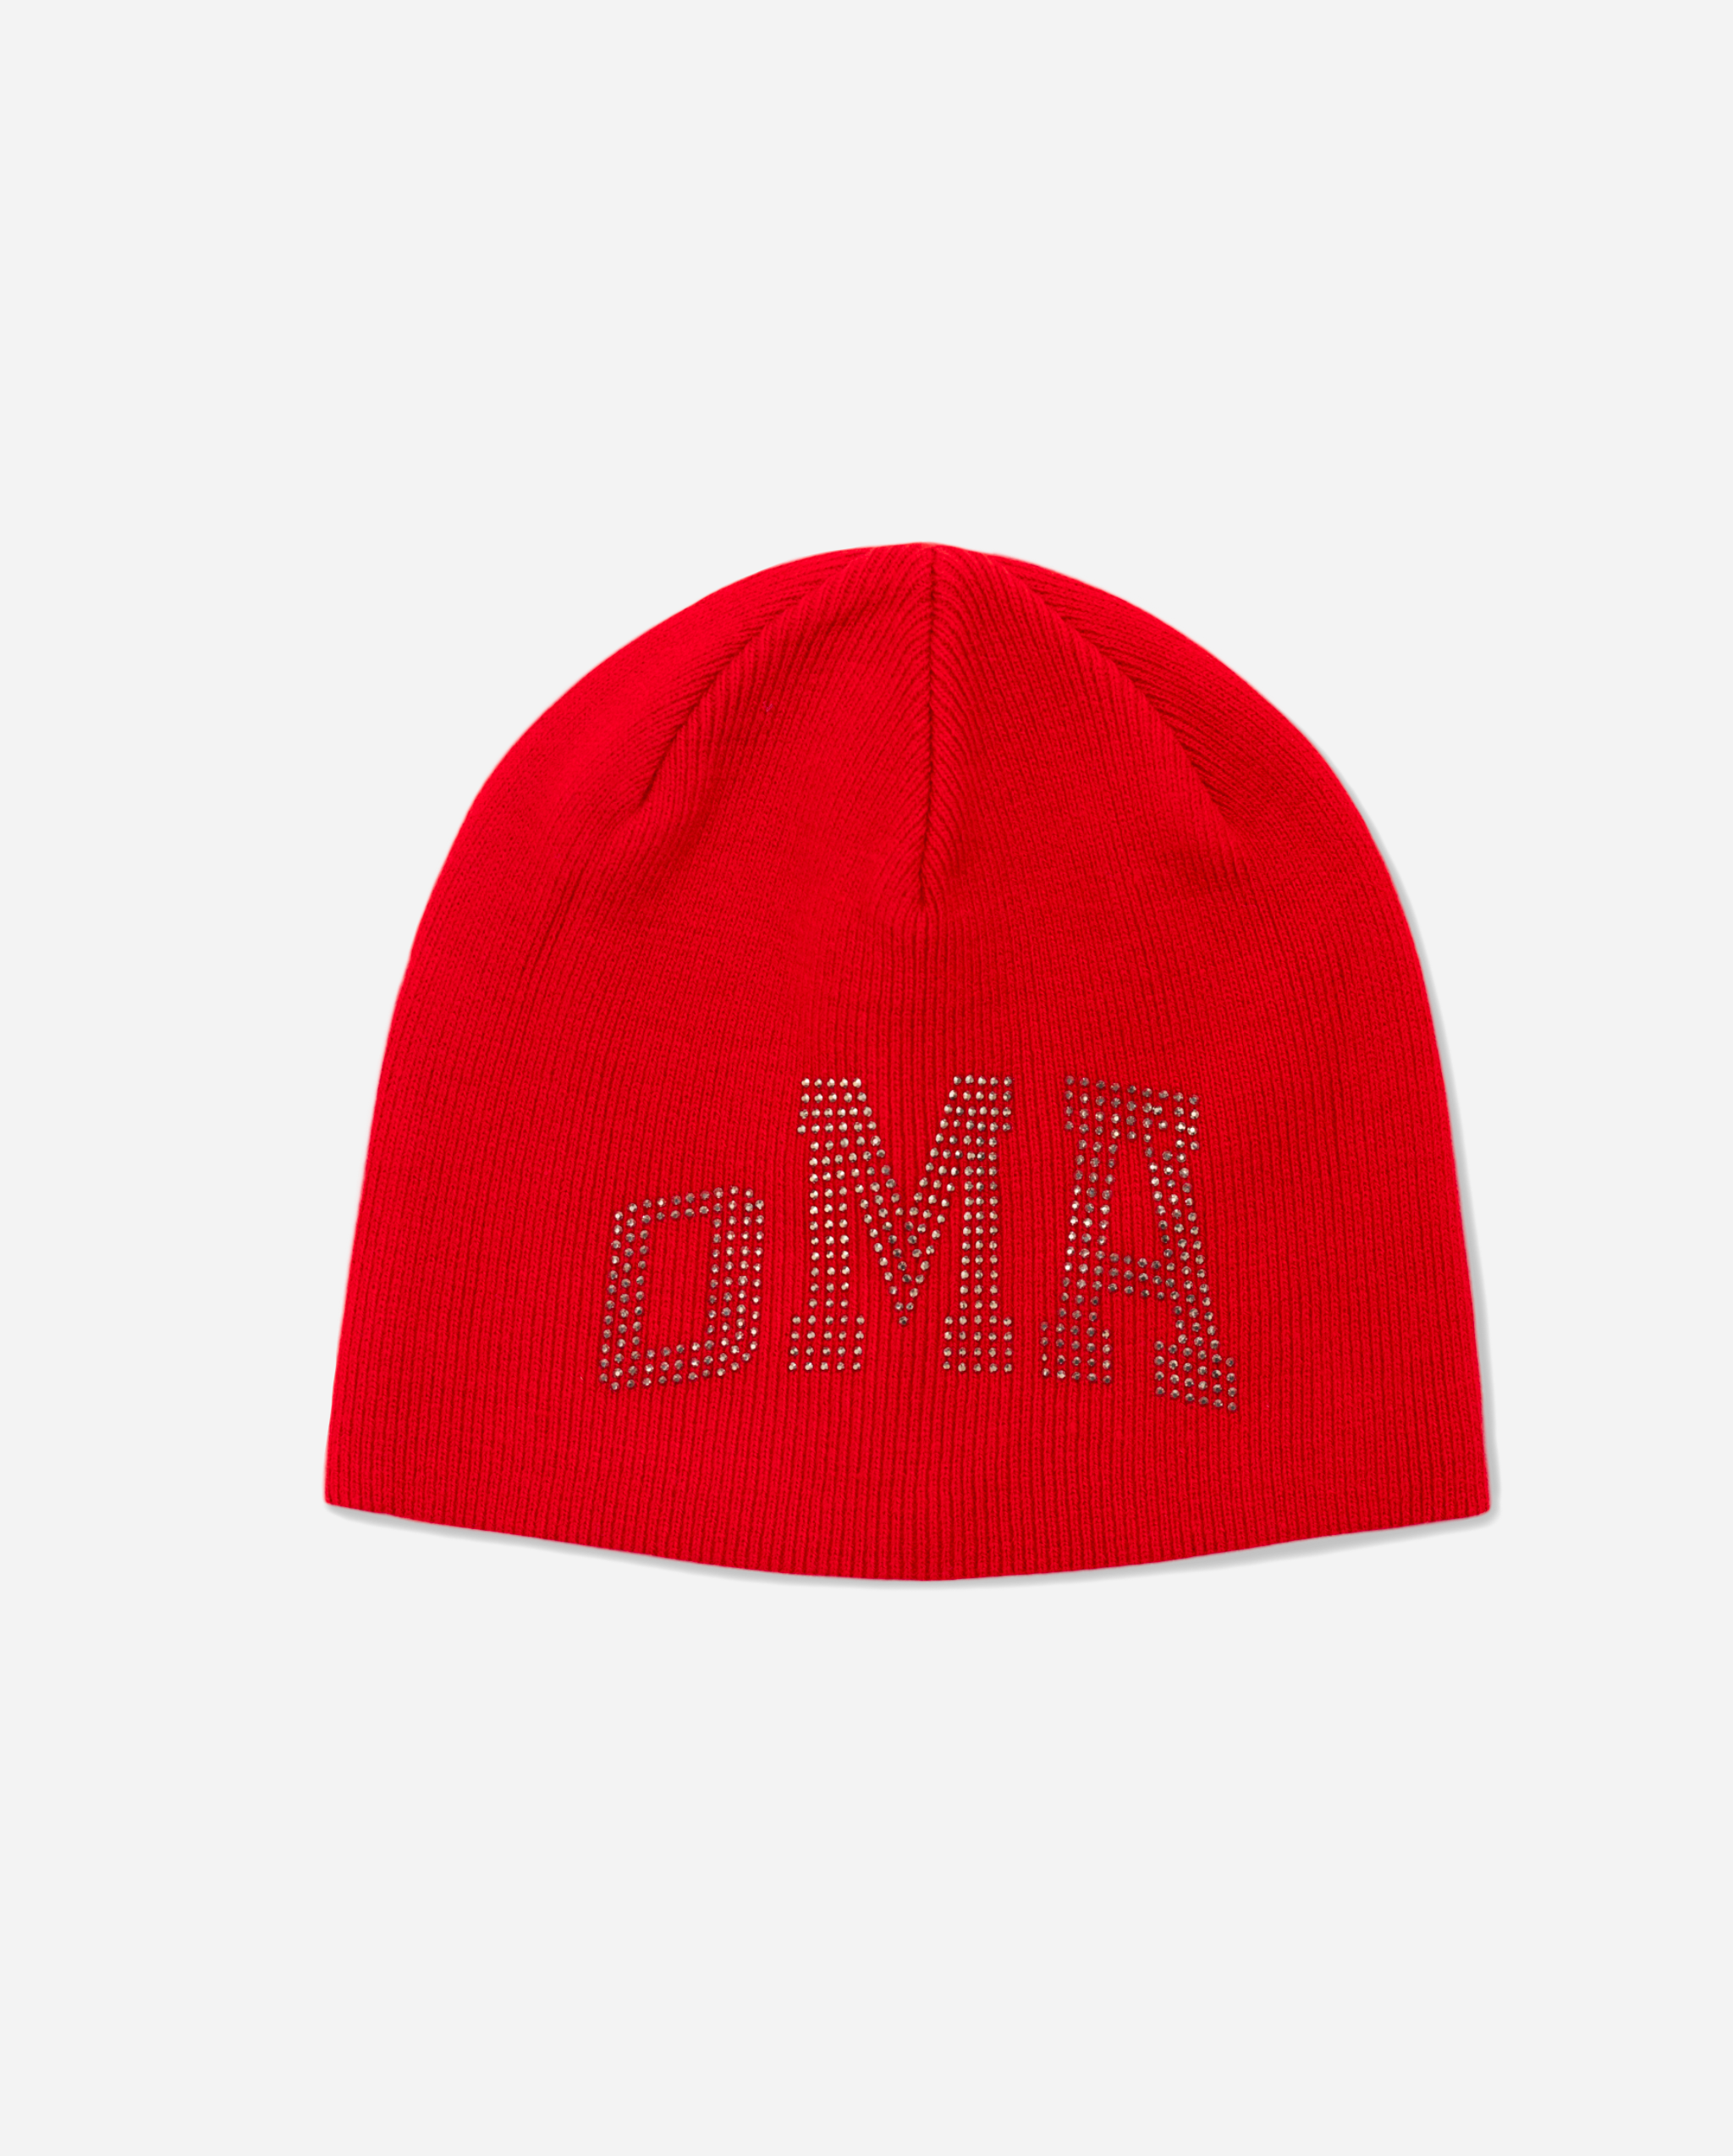 oMA STUDDED SKULL CAP (RED/SILVER)